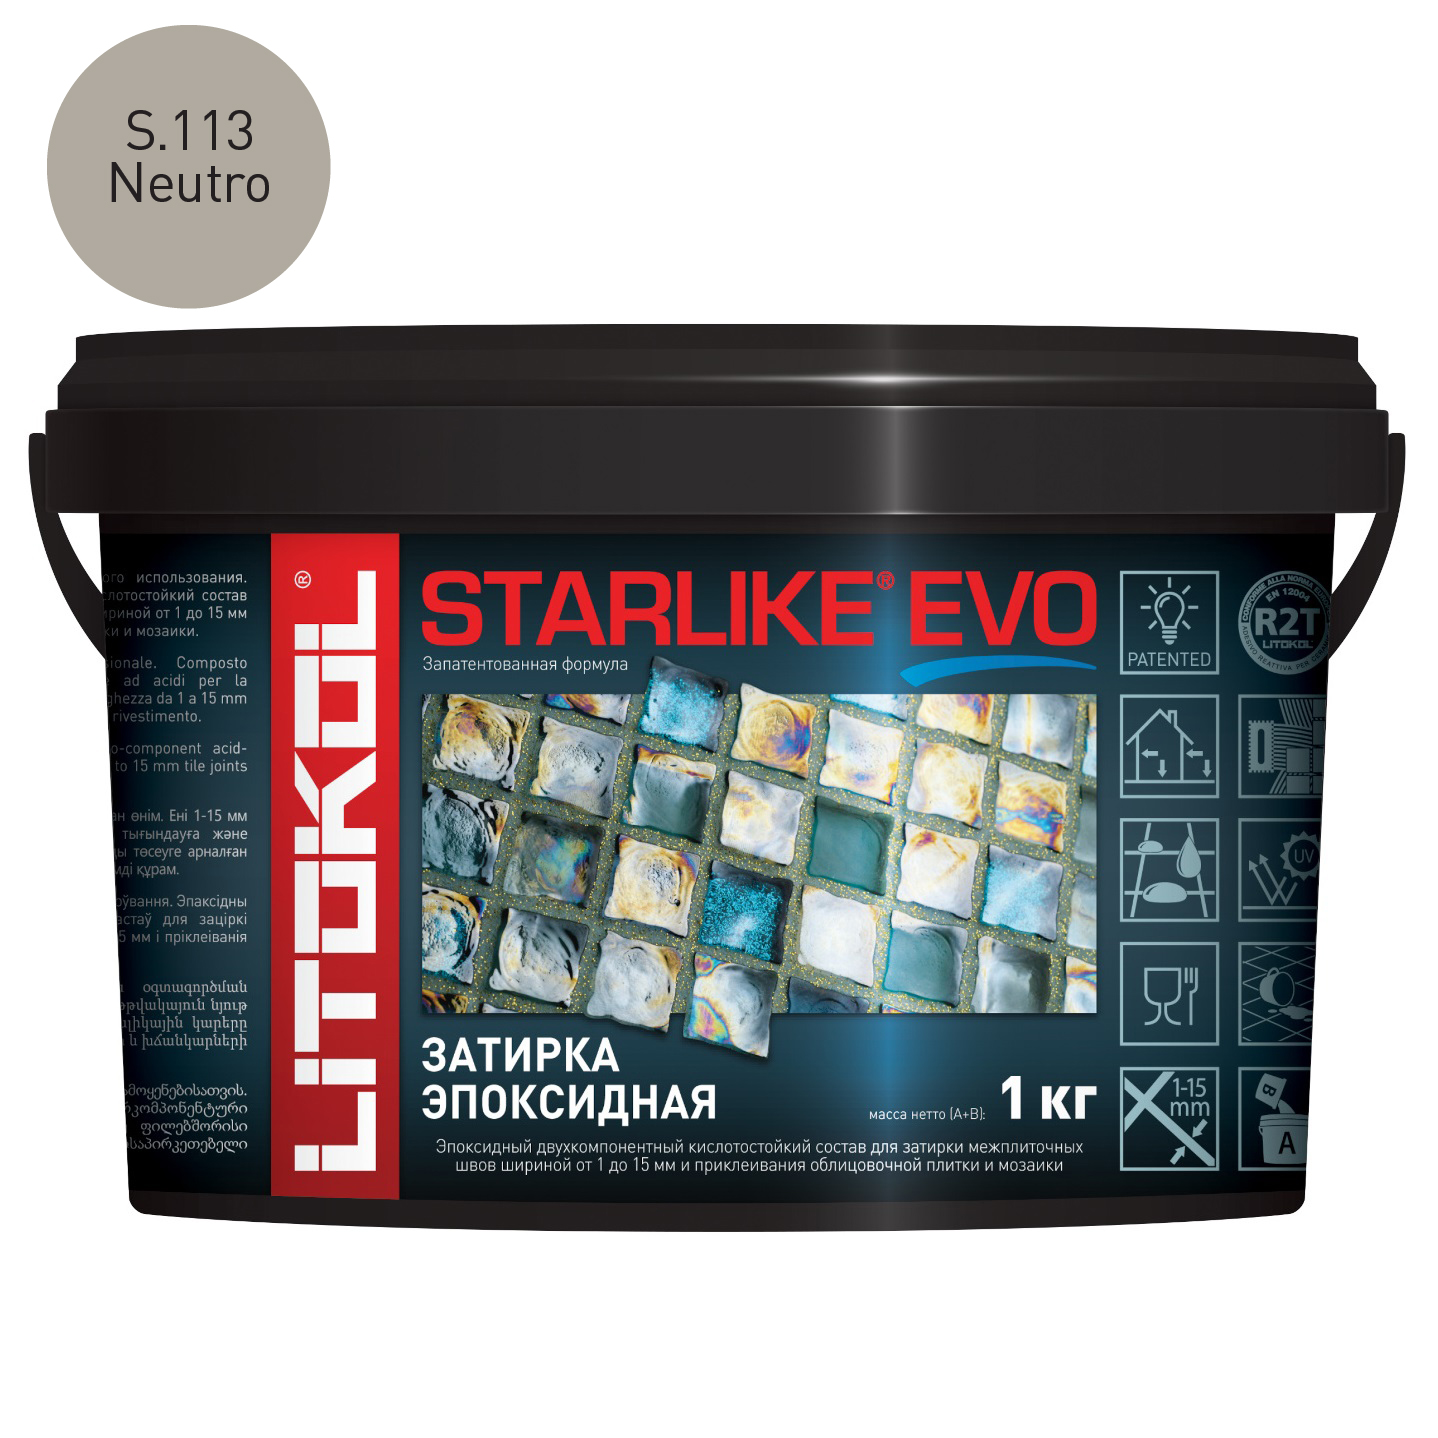 Затирка эпоксидная Litokol Starlike Evo S.113 Neutro (1 кг.)